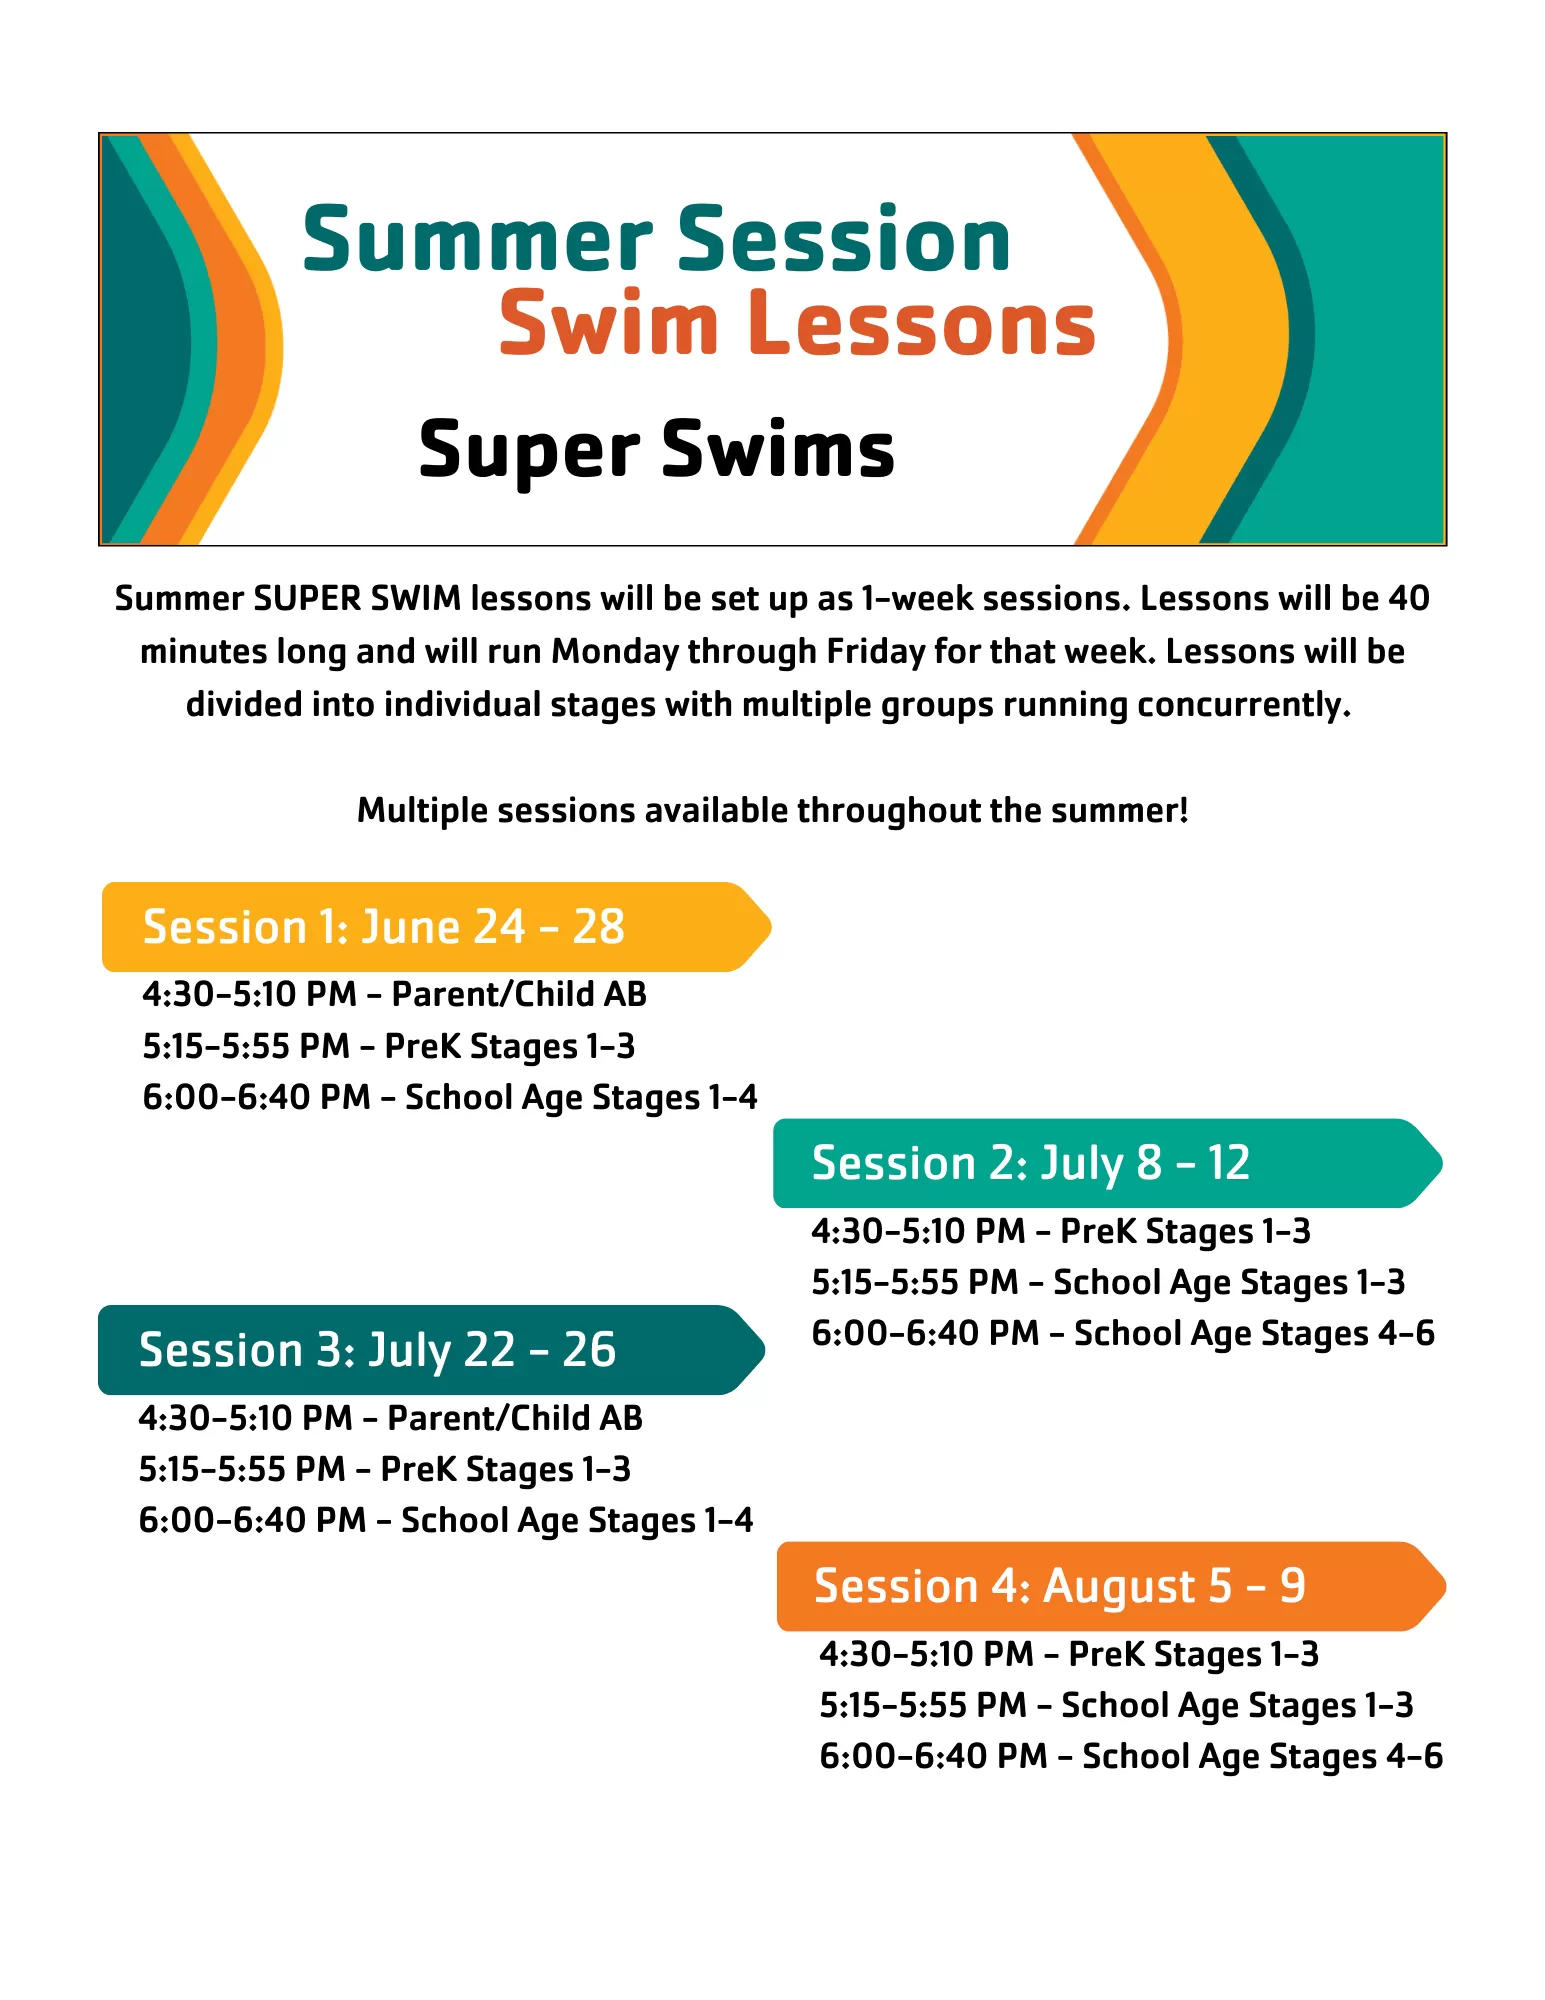 Super Swims